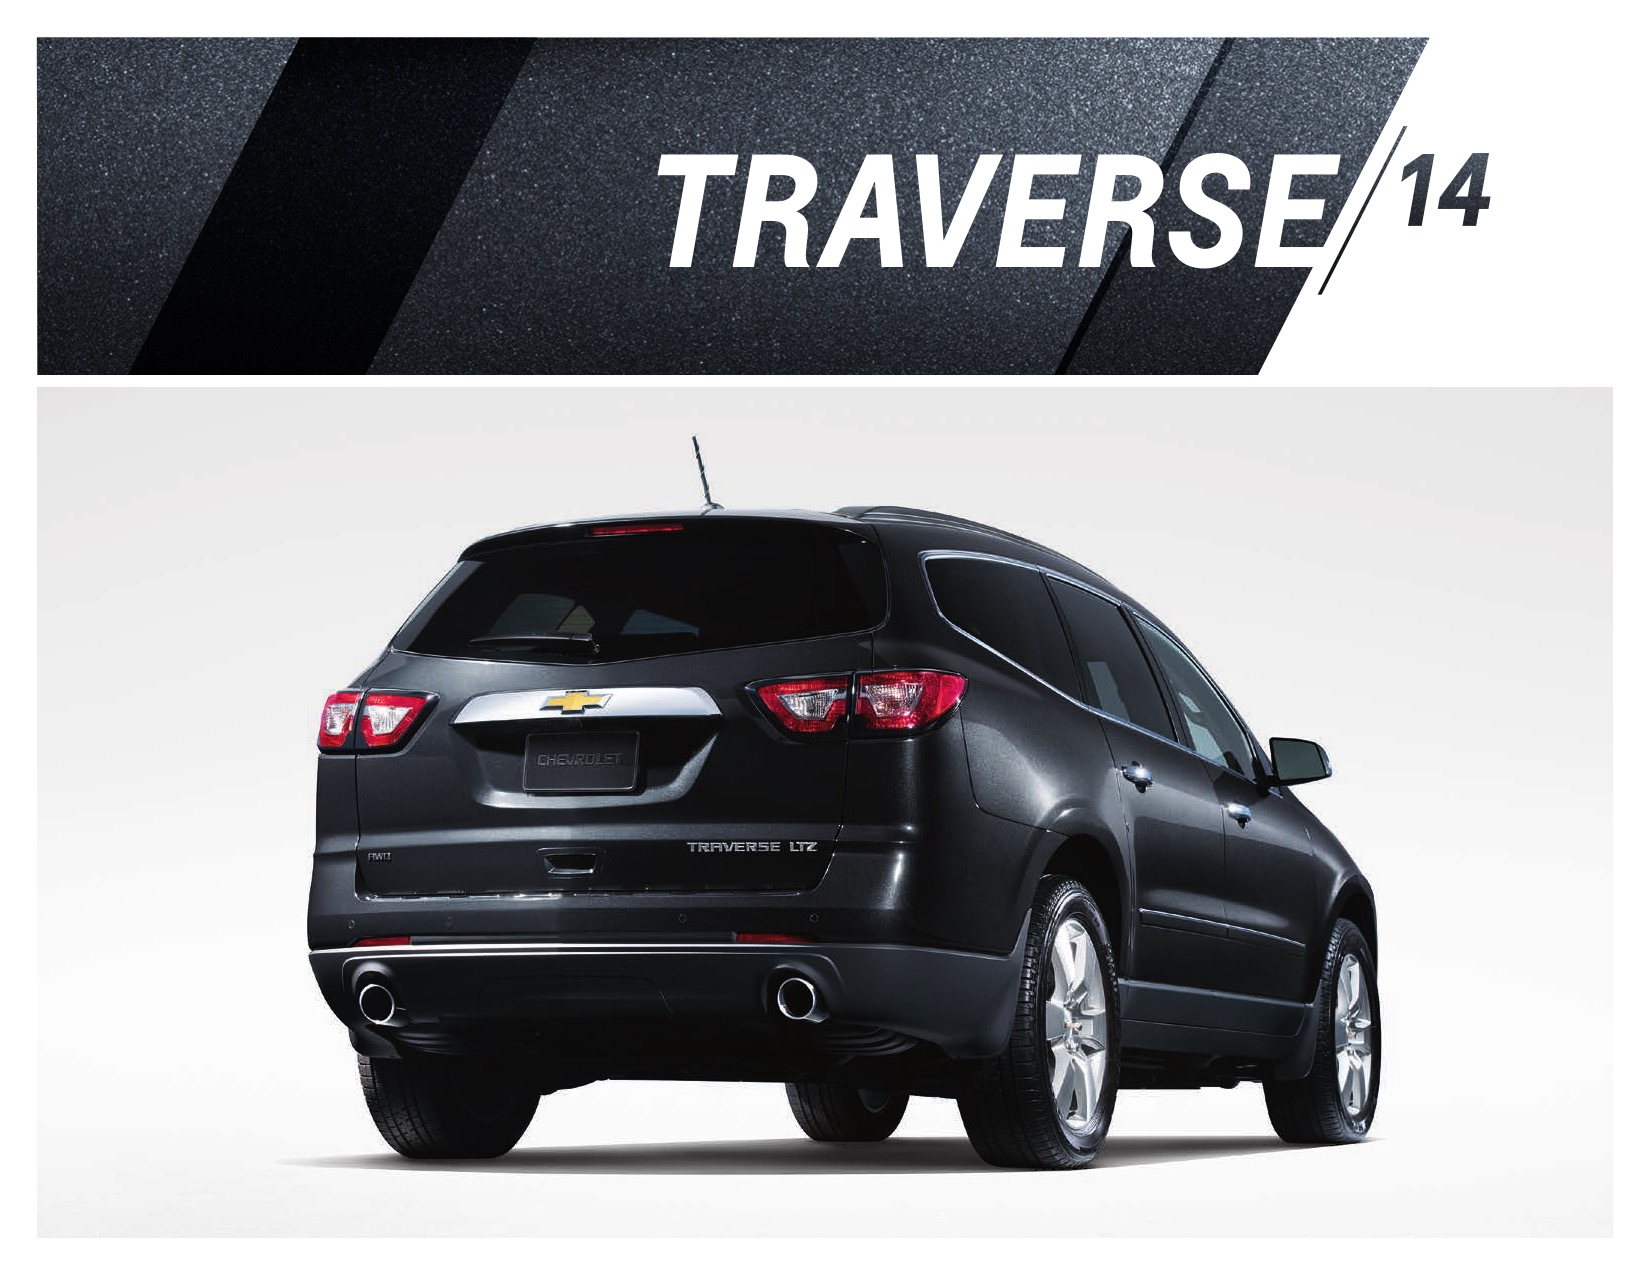 2014 Chevrolet Traverse Brochure